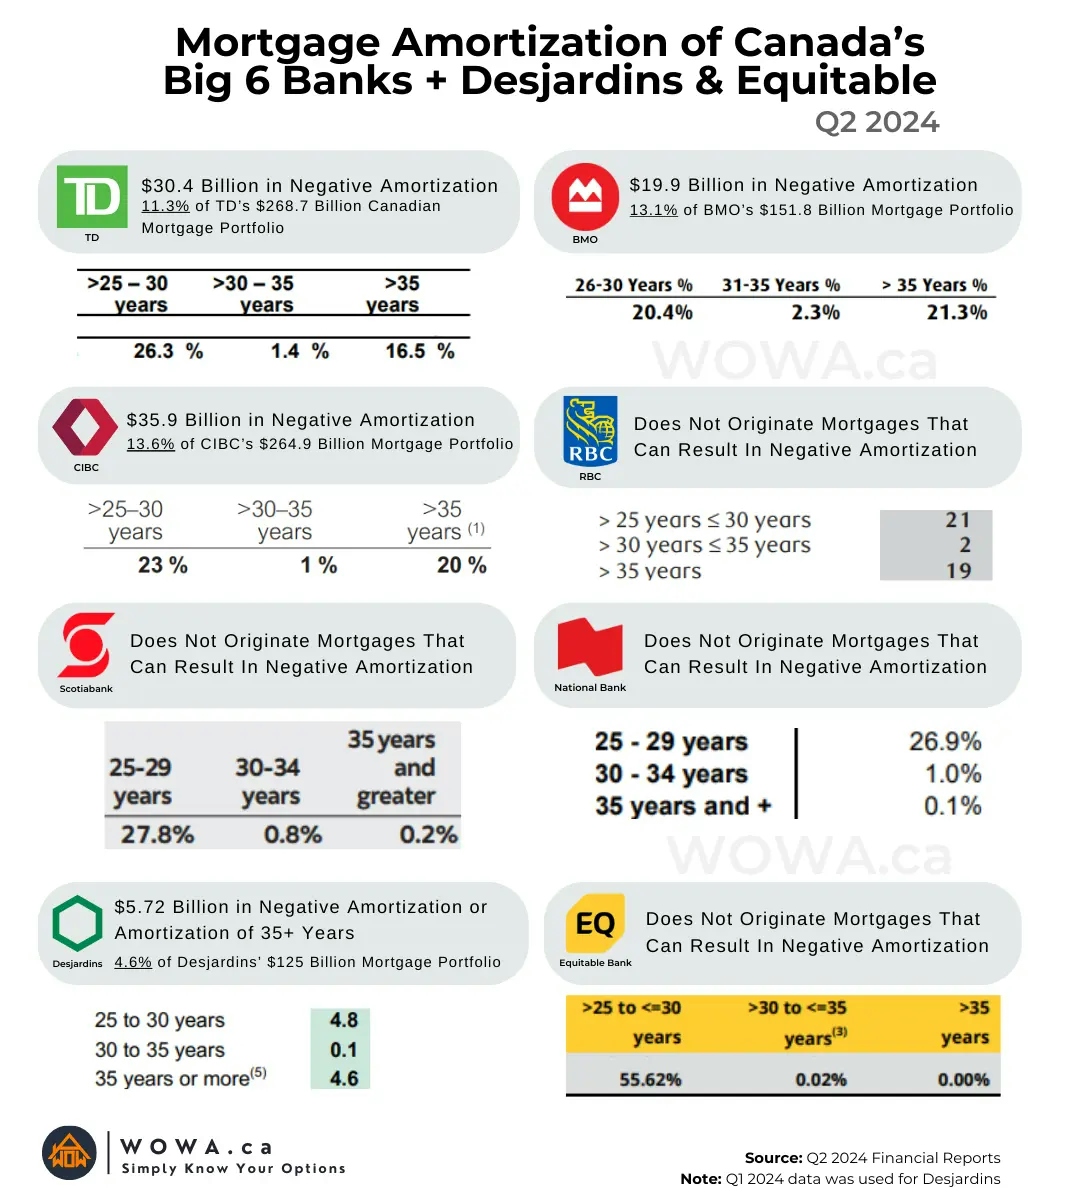 Mortgage Amortization of Canada's Big 6 Banks (Q2 2024)